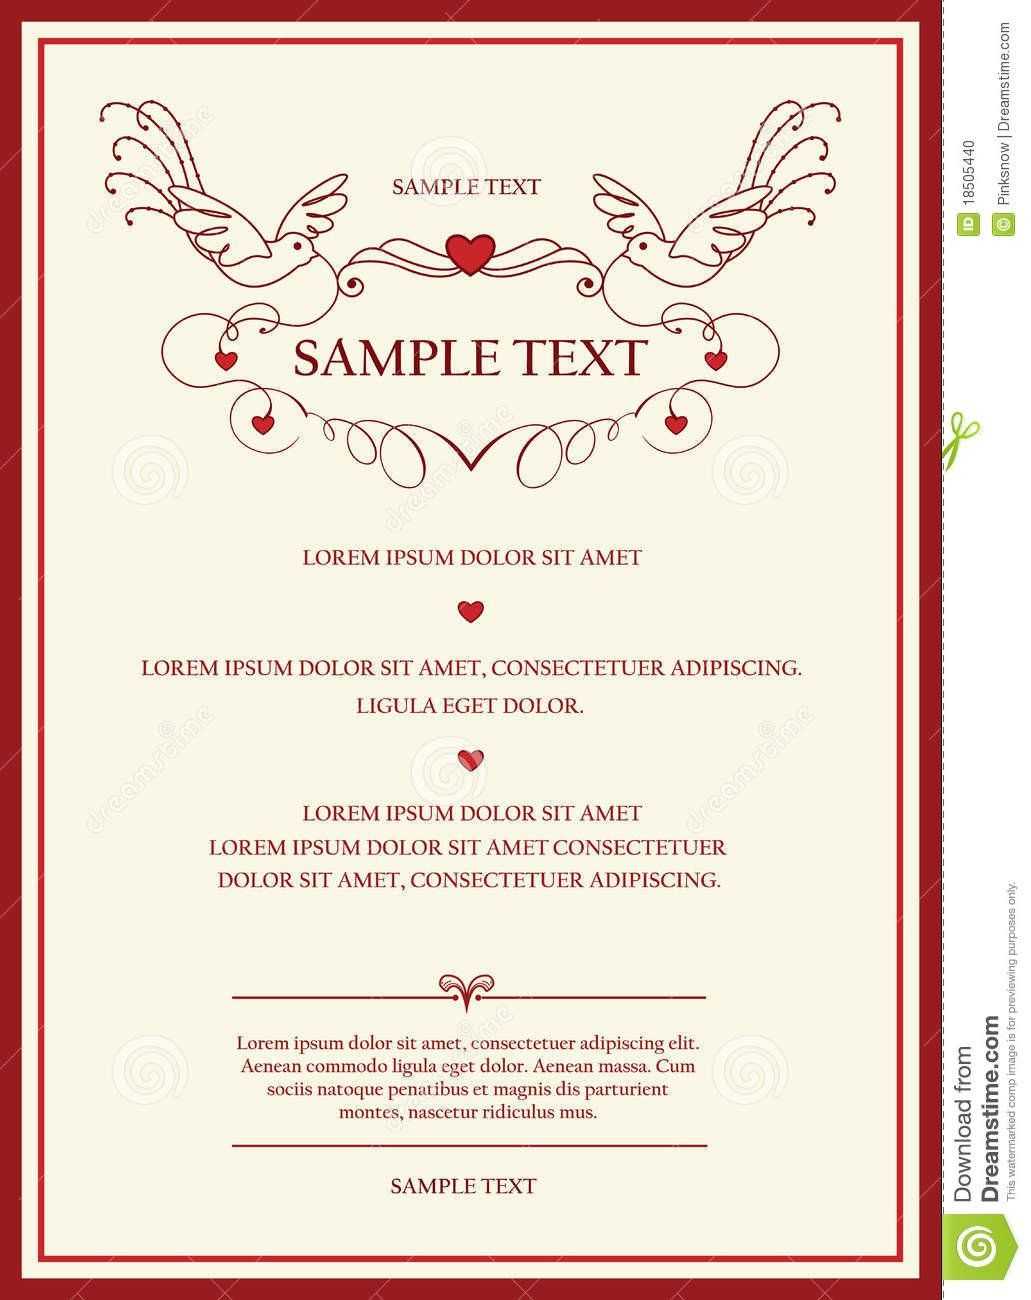 Wedding Invitation Cards Templates In 2019 | Wedding Inside Sample Wedding Invitation Cards Templates